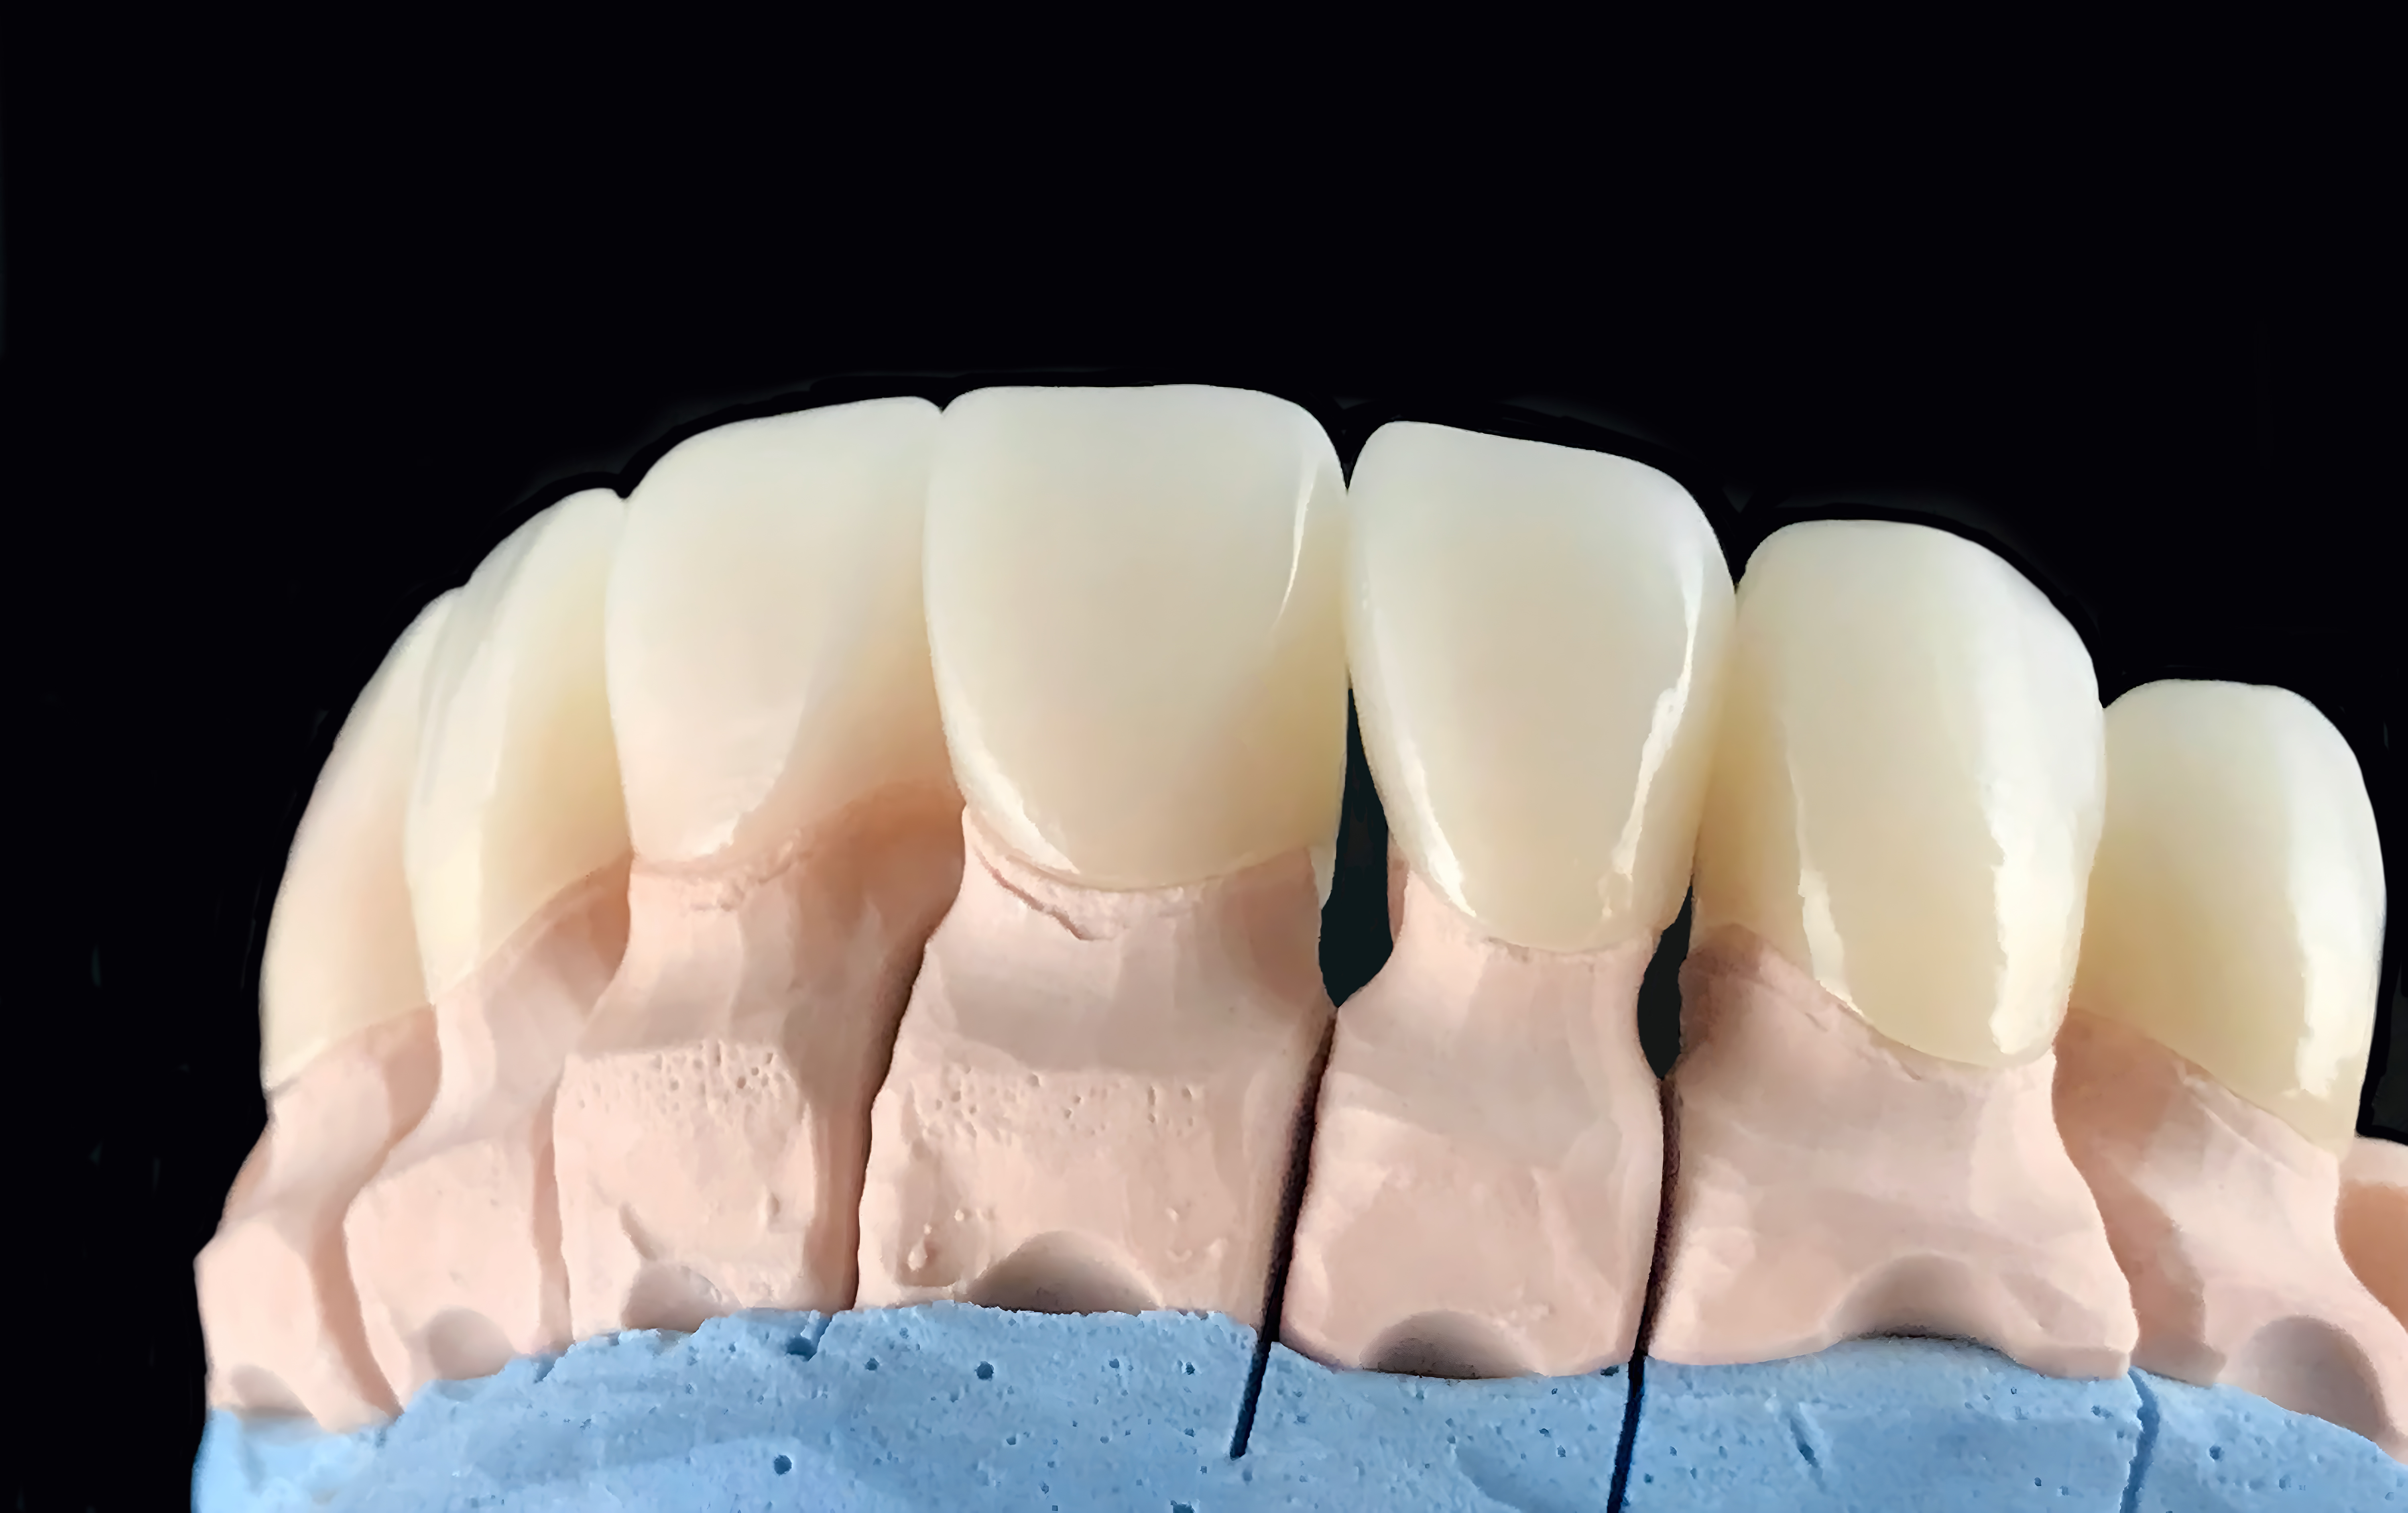 Natural look press ceramic veneers and crowns on dental plaster model. Close-up ceramic tooth crown